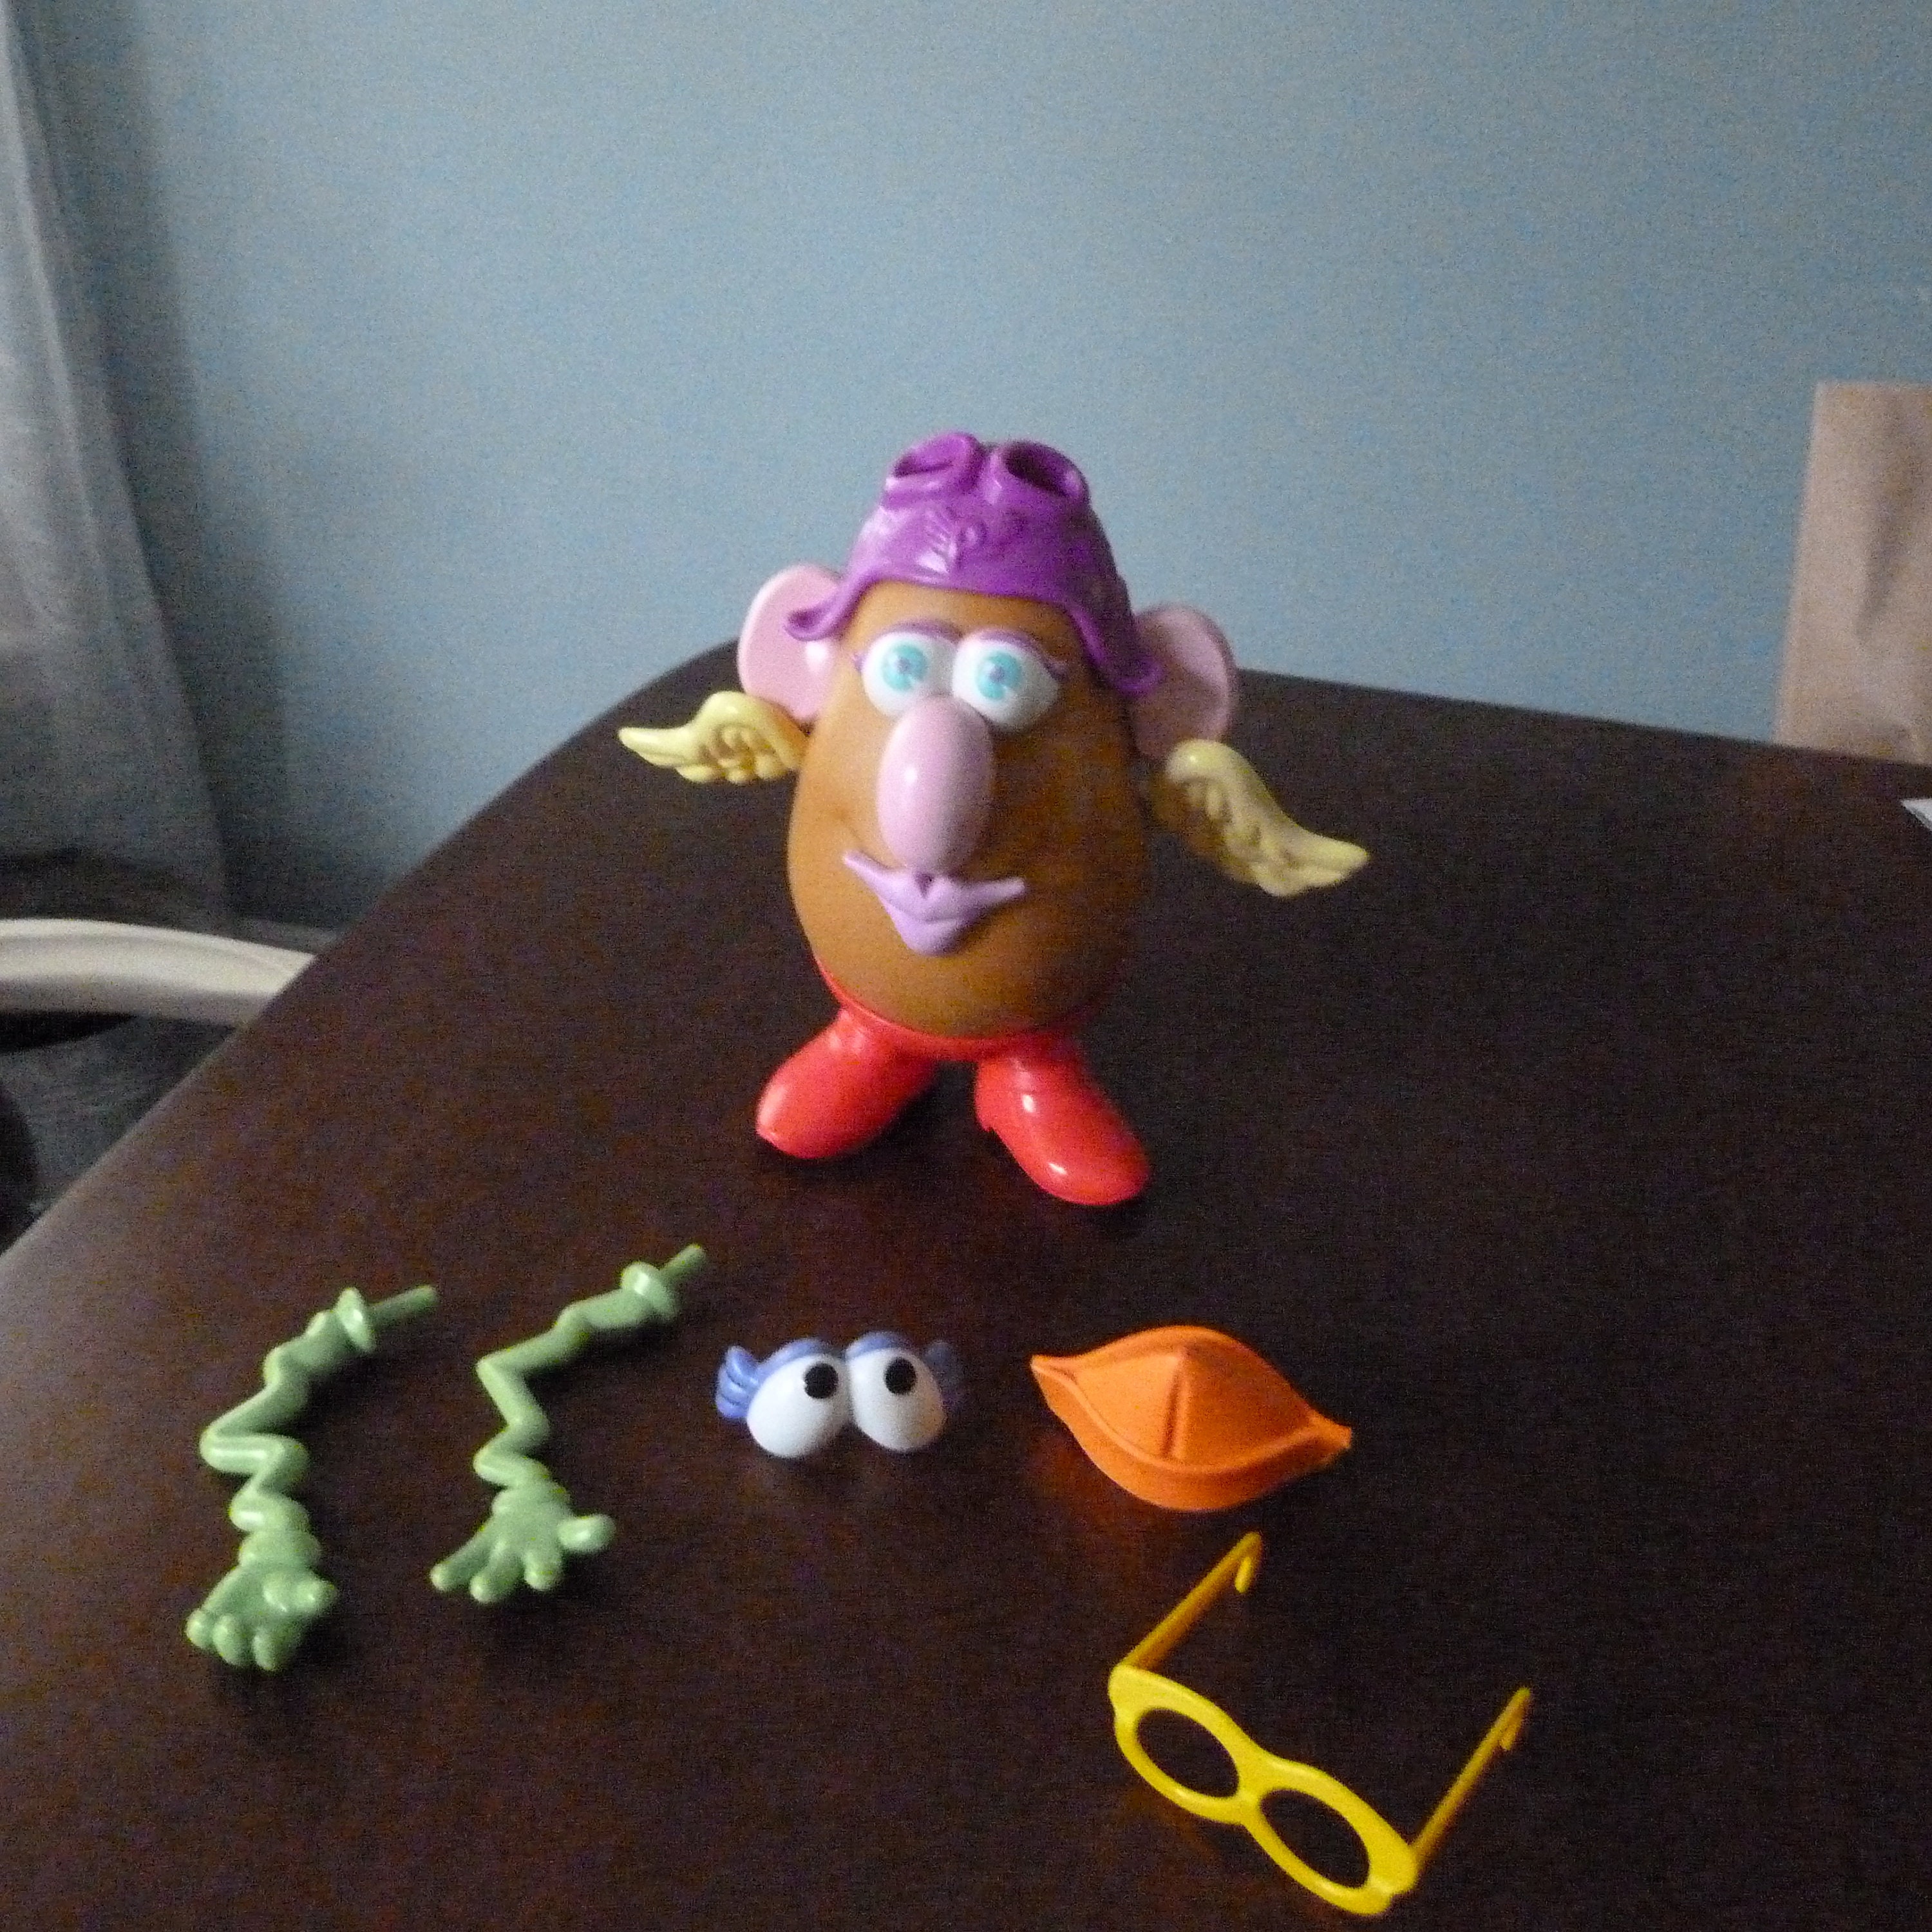 Hilariously brilliant Mr. Potato Head headpiece gets best